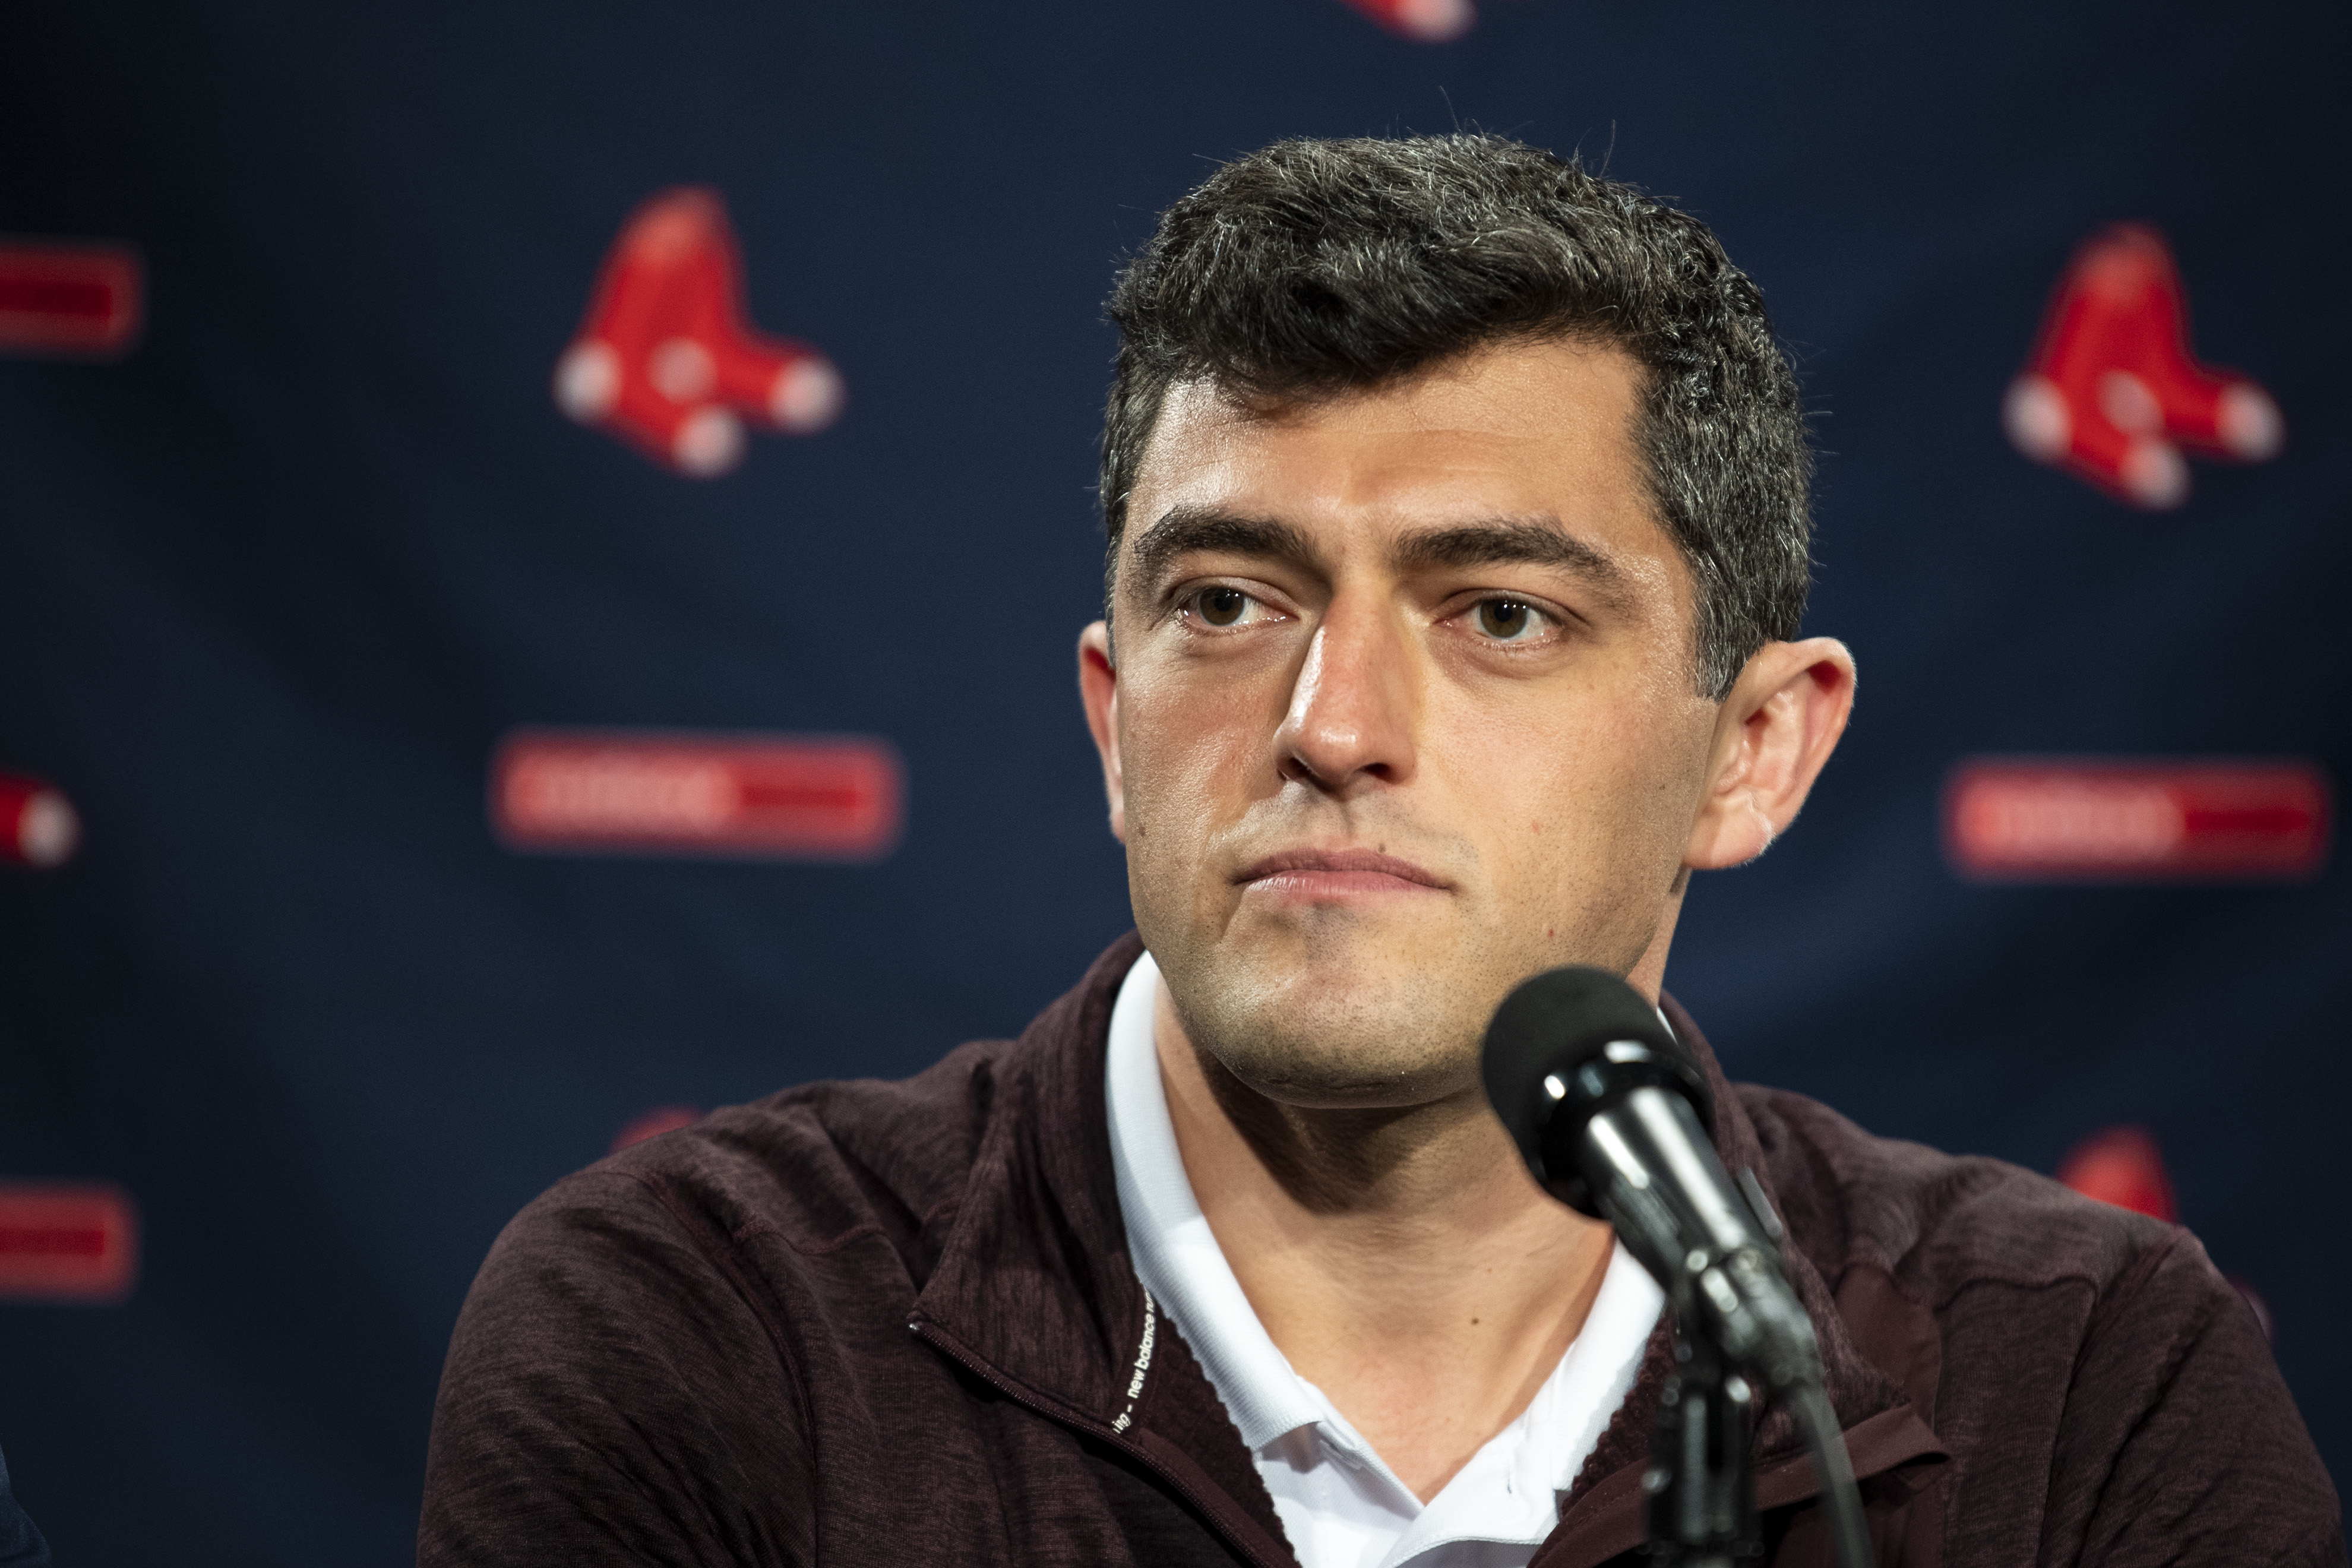 Red Sox Notebook: Alex Cora expects Matt Barnes to be an American League All -Star